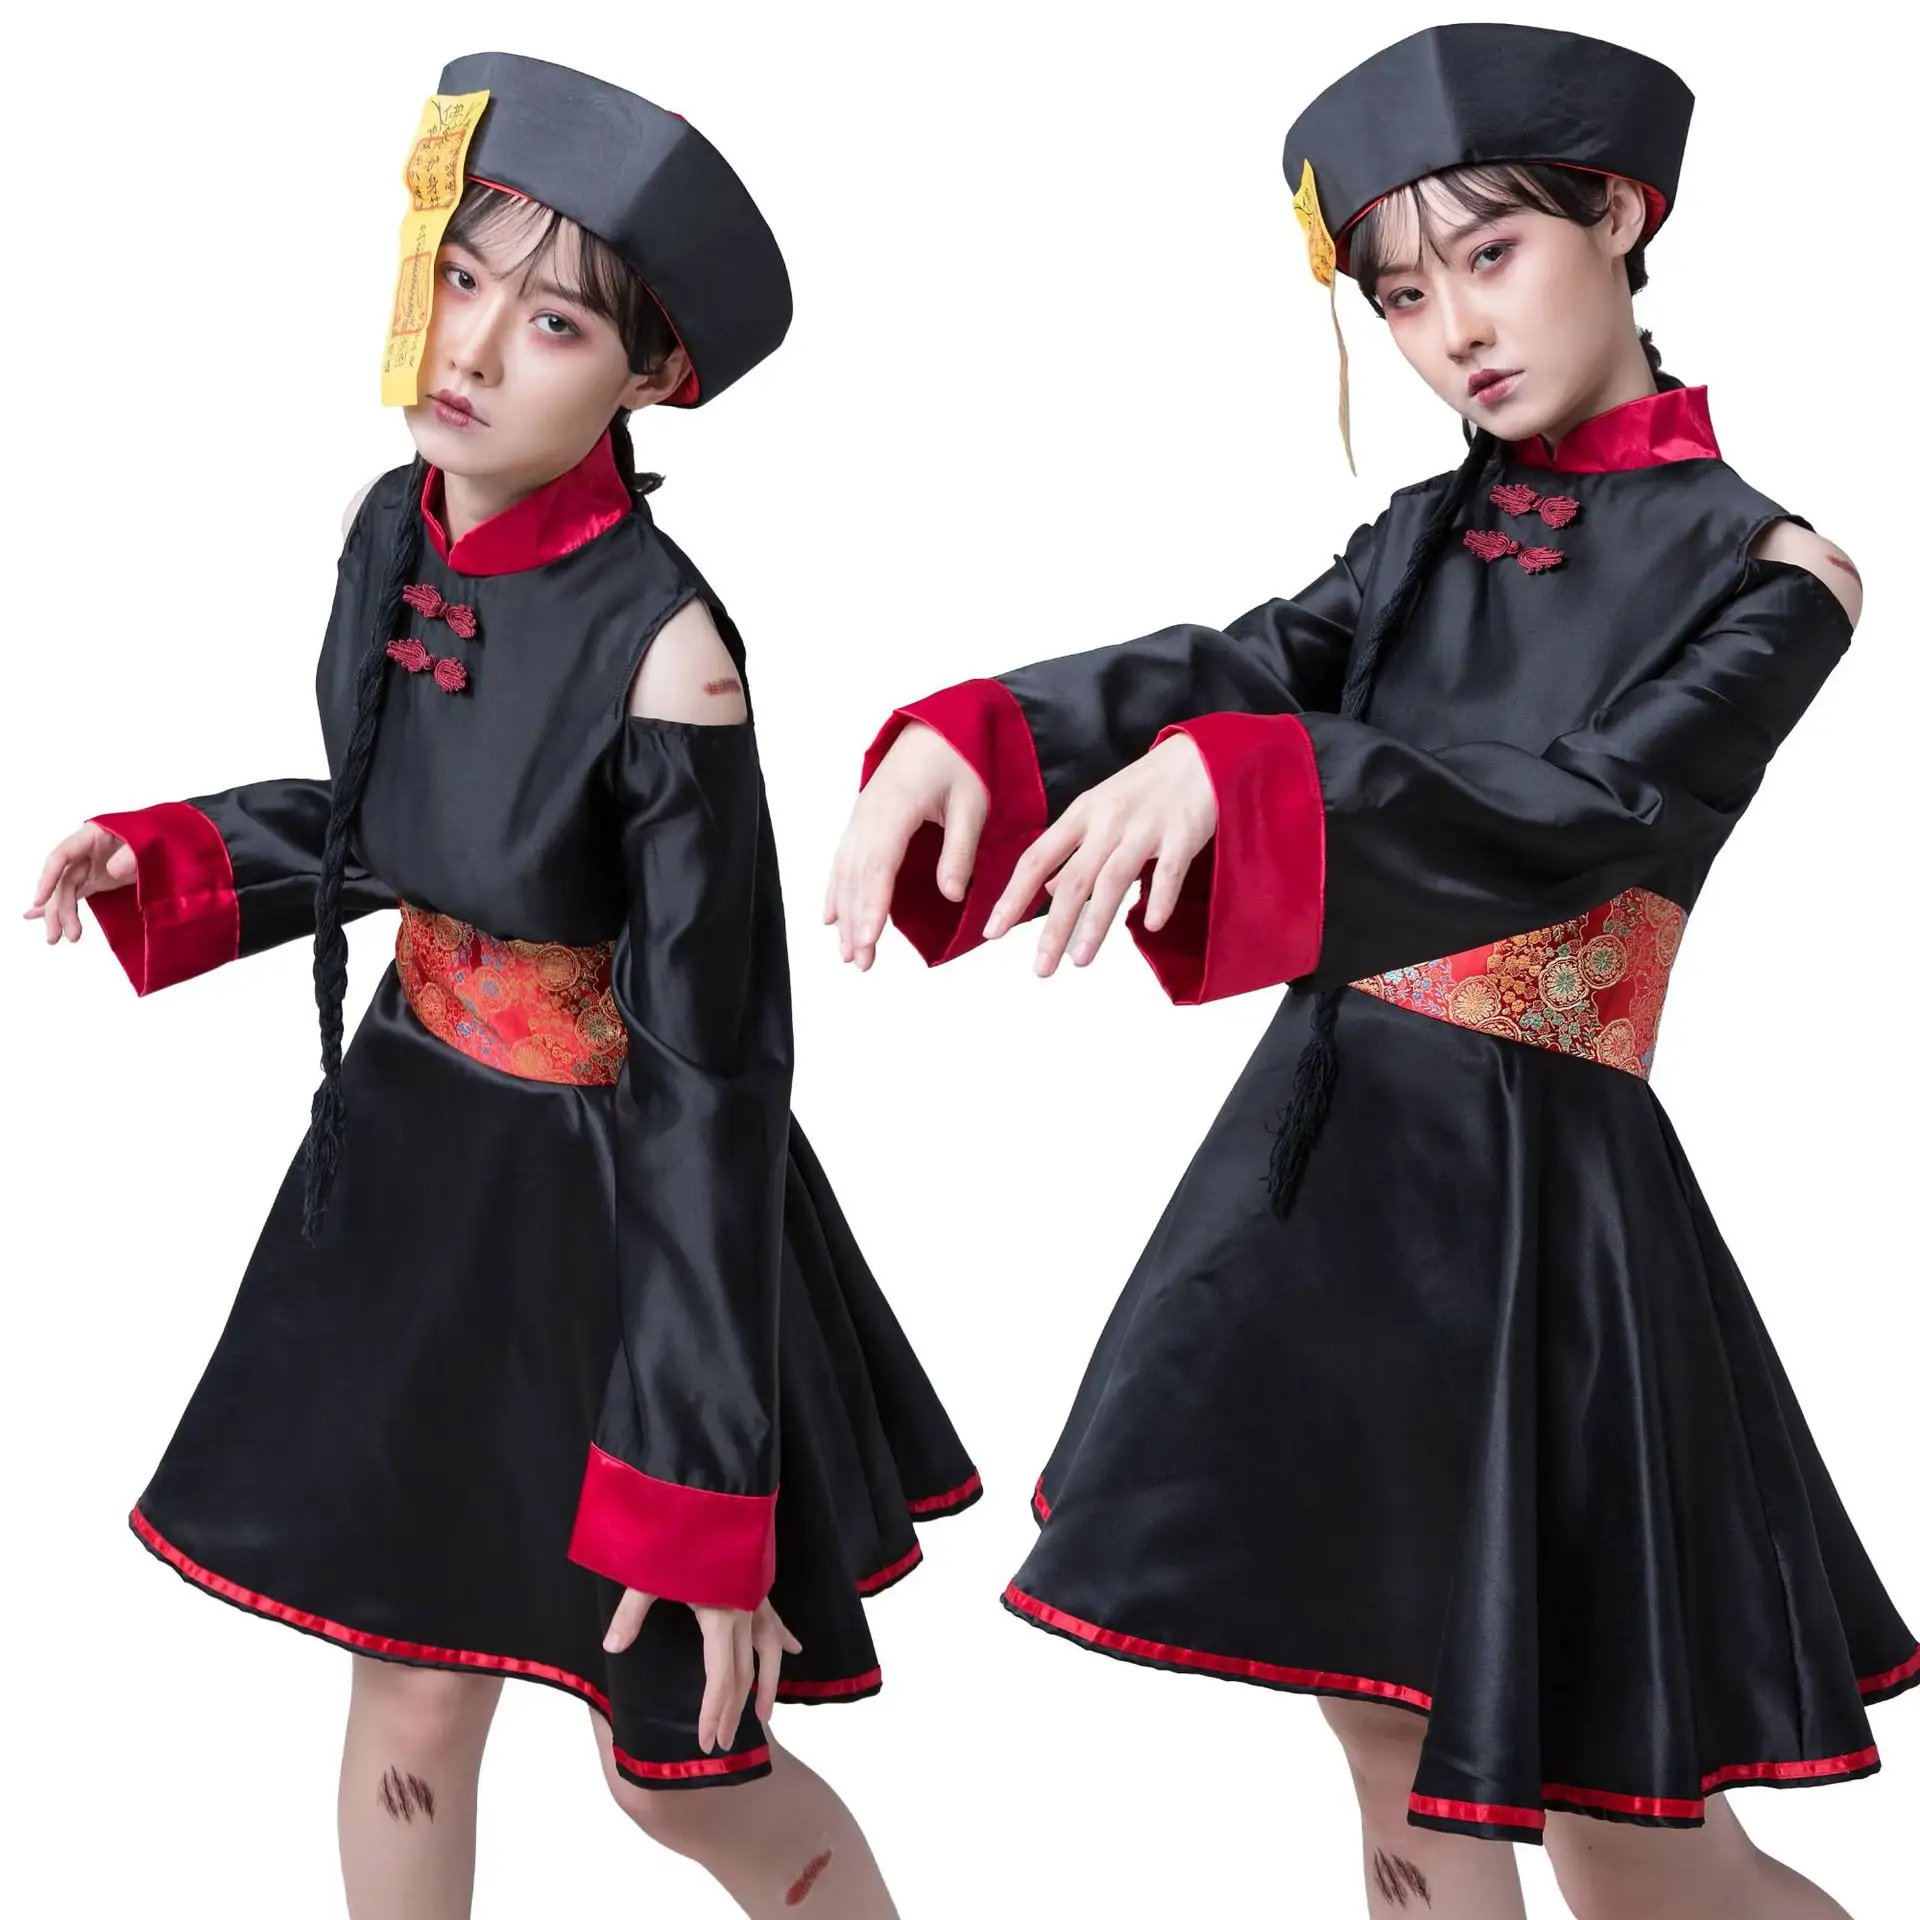 Trajes retrô de vampiro zumbi, vestido estampado bordado japonês, roupas cosplay de Halloween com adesivos grátis, para mulheres, poliéster